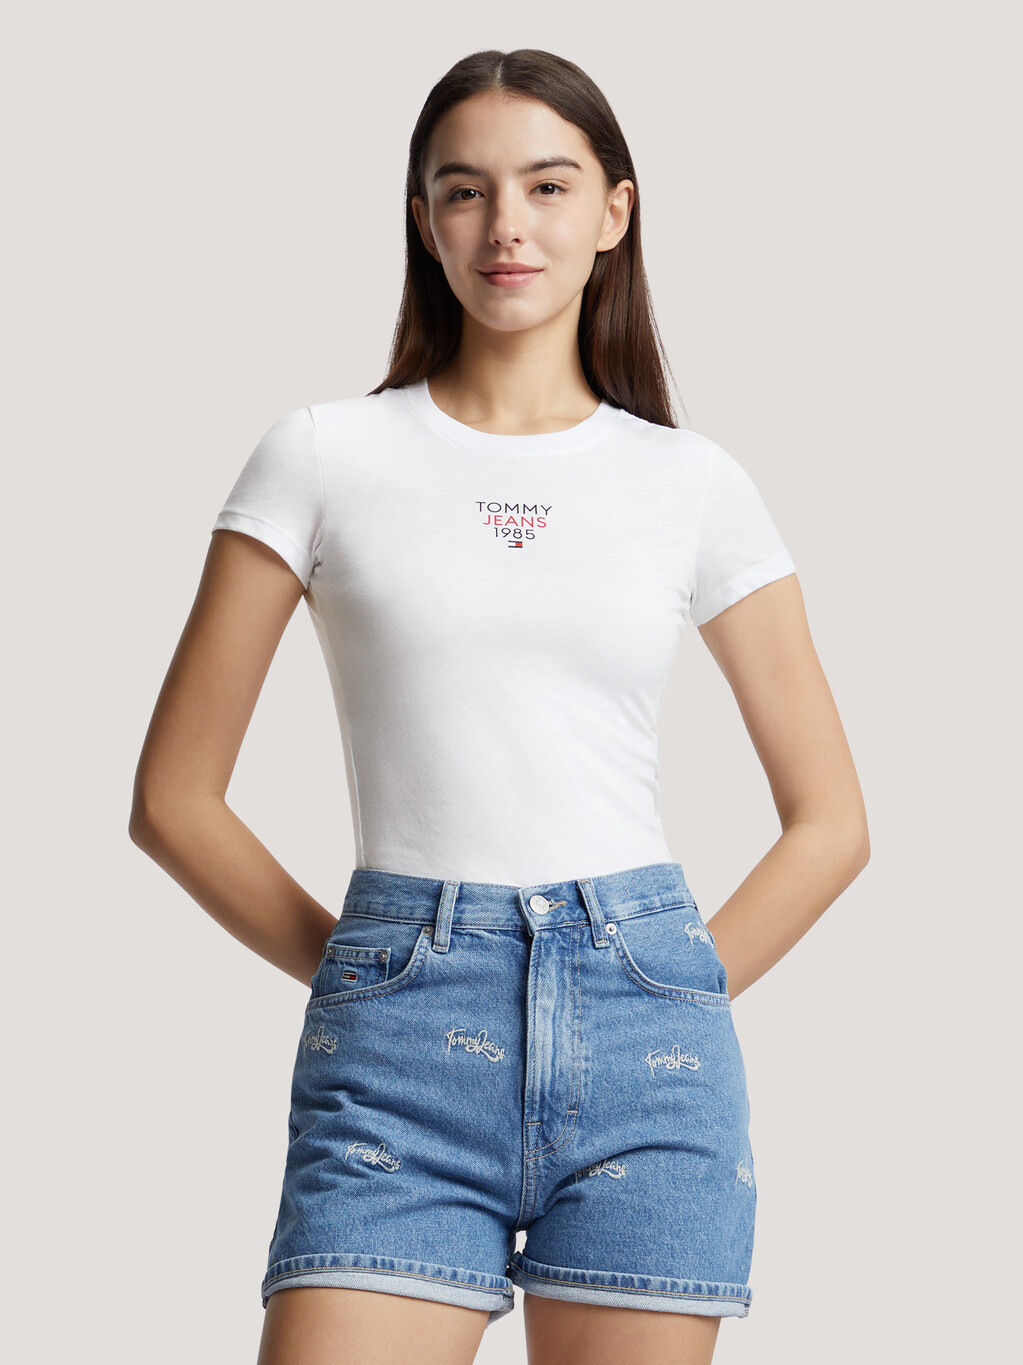 Essential 1985 Slim T-Shirt, White, hi-res